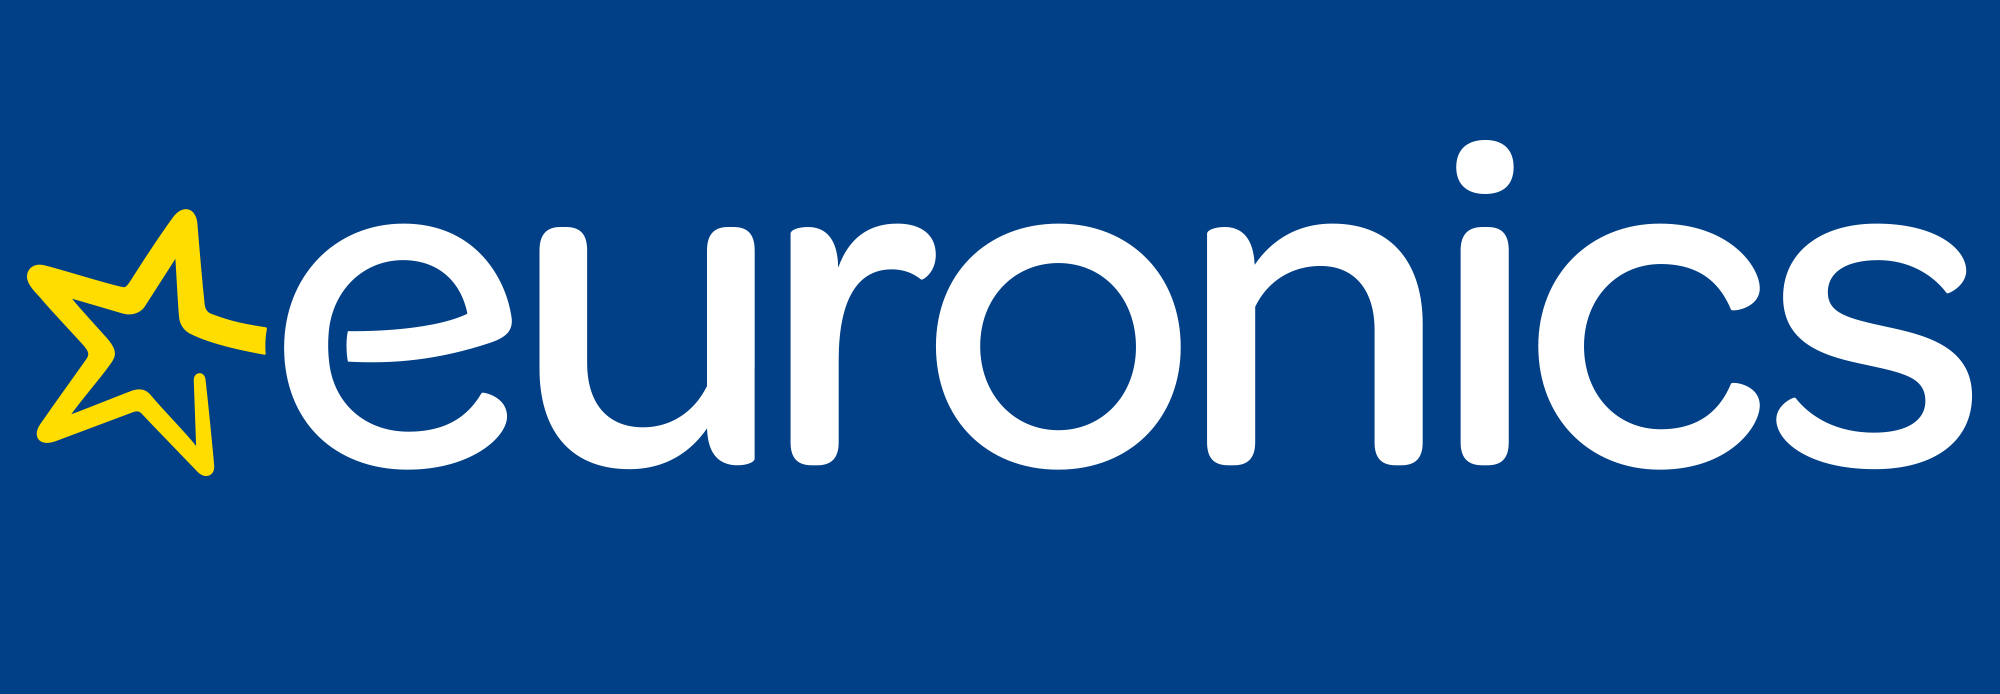 Euronics Logo1